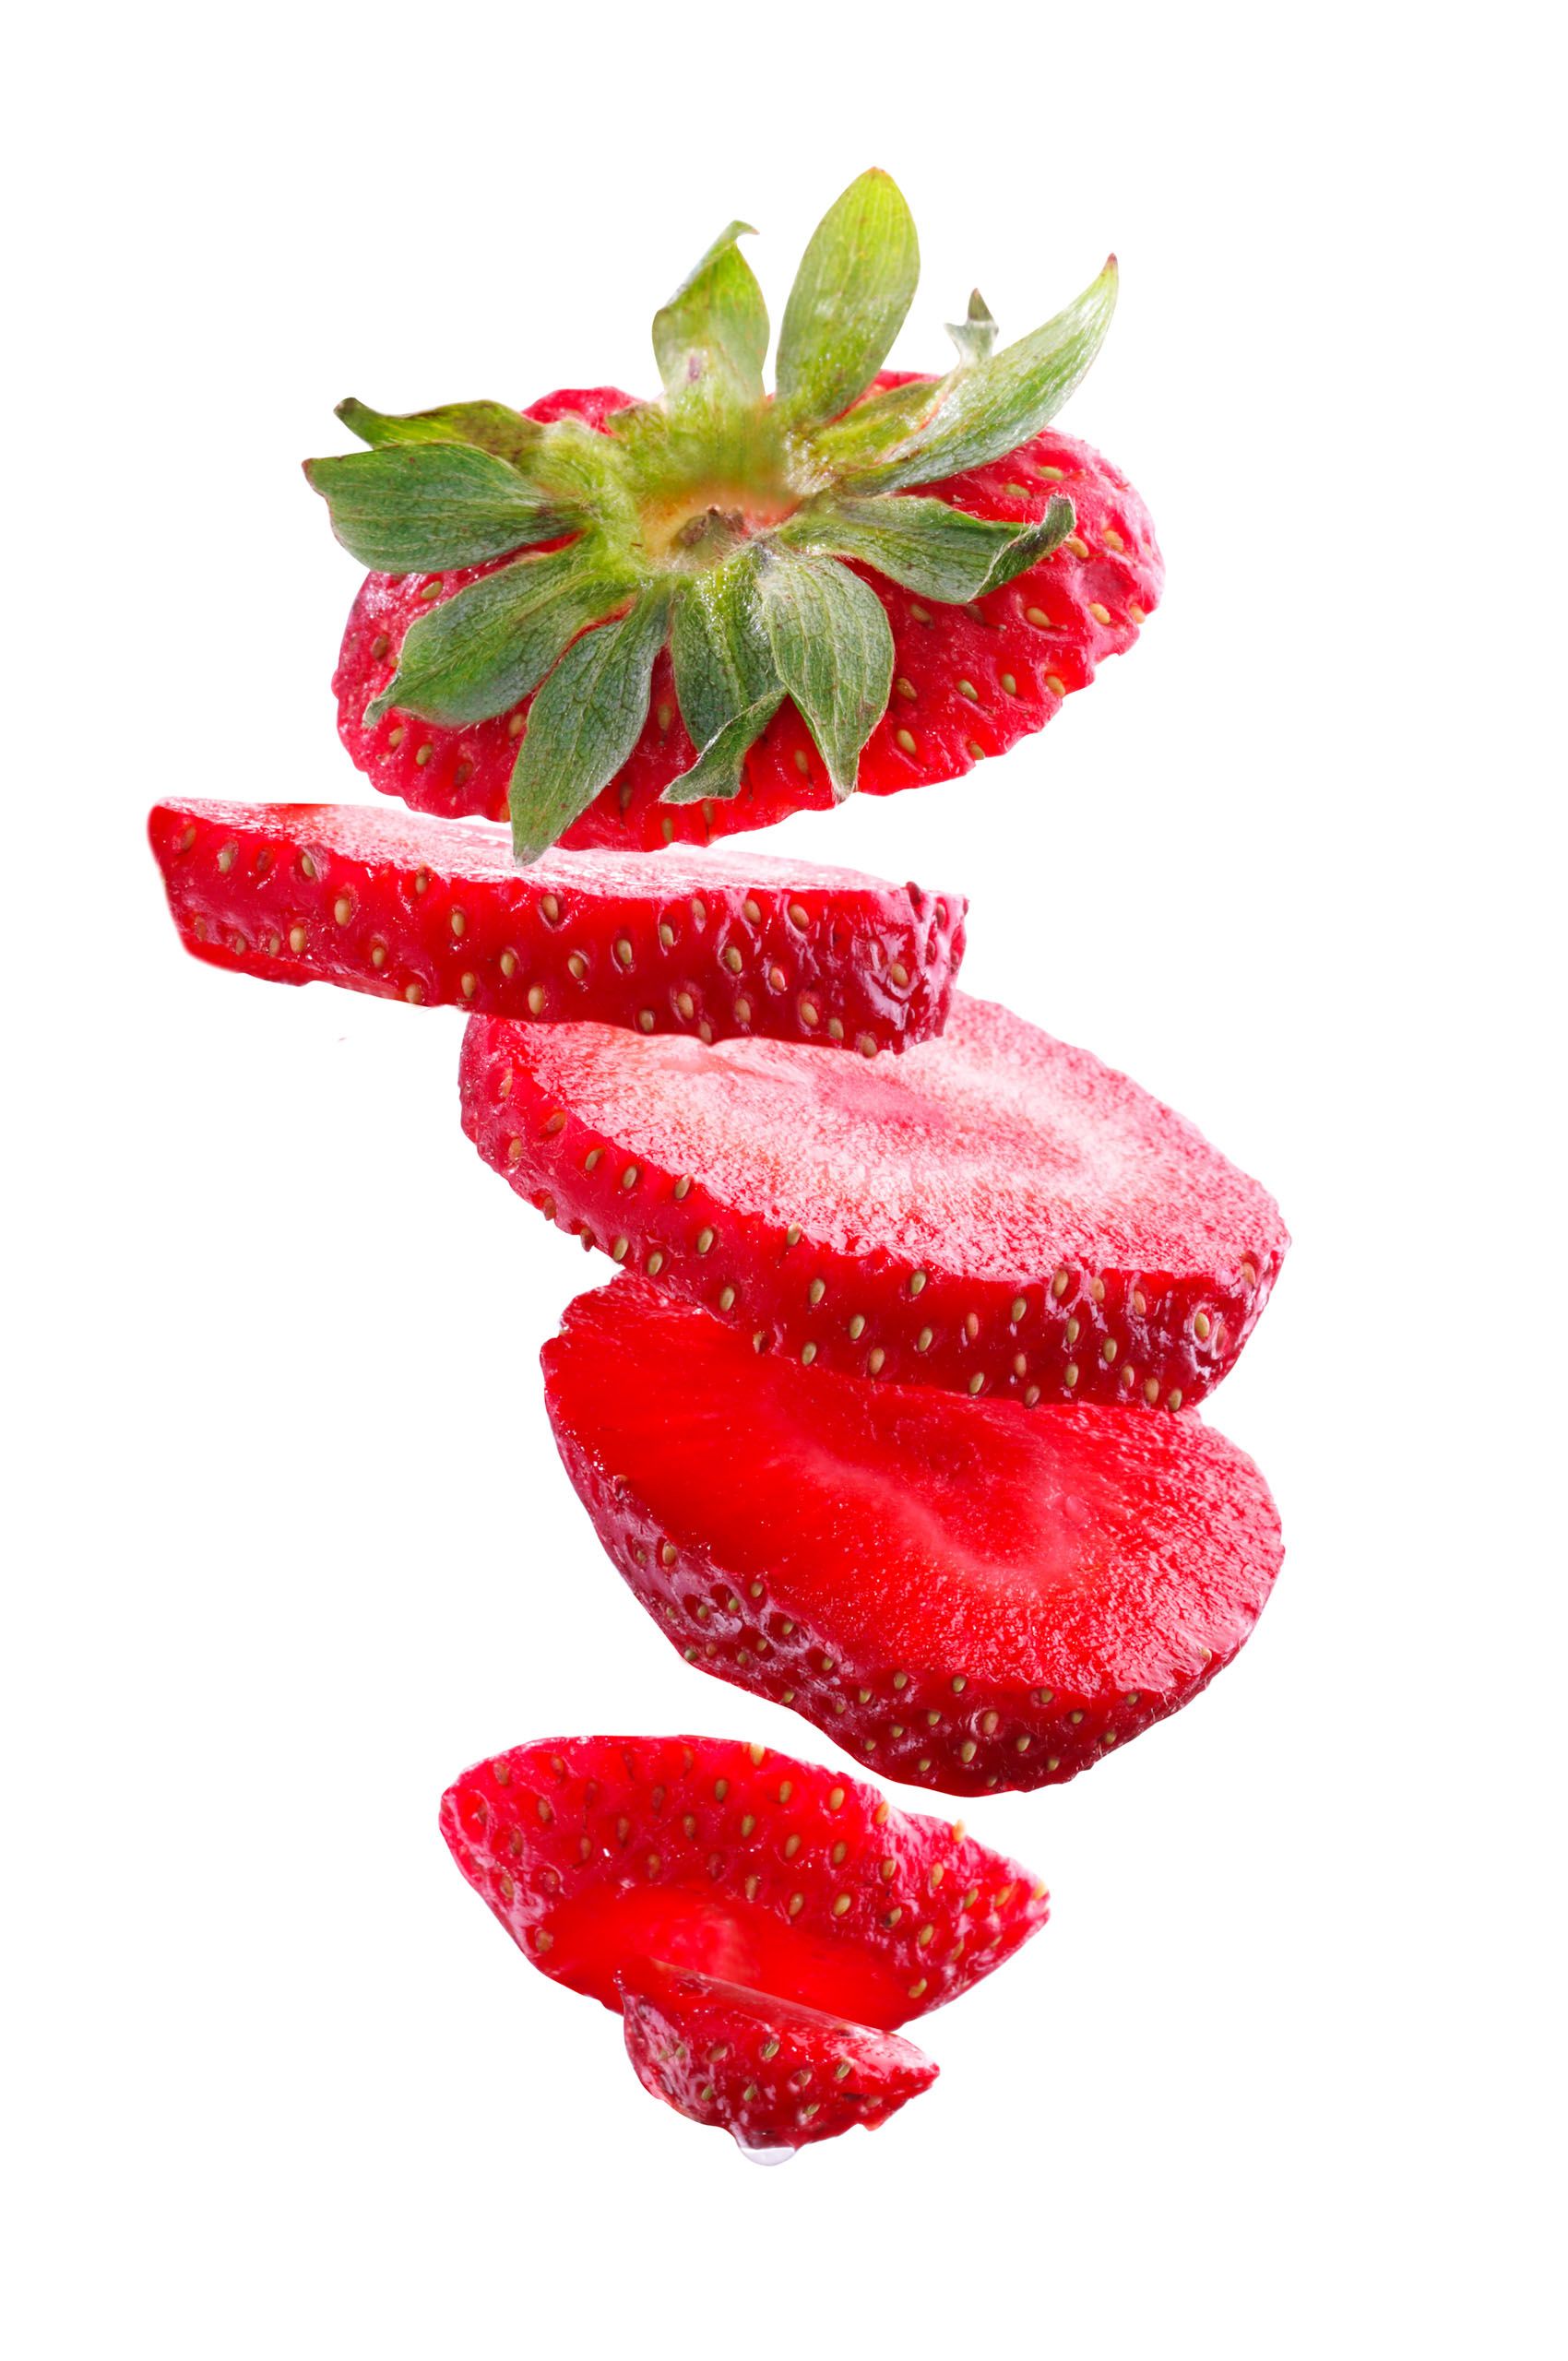 Fruit ninja sliced strawberry